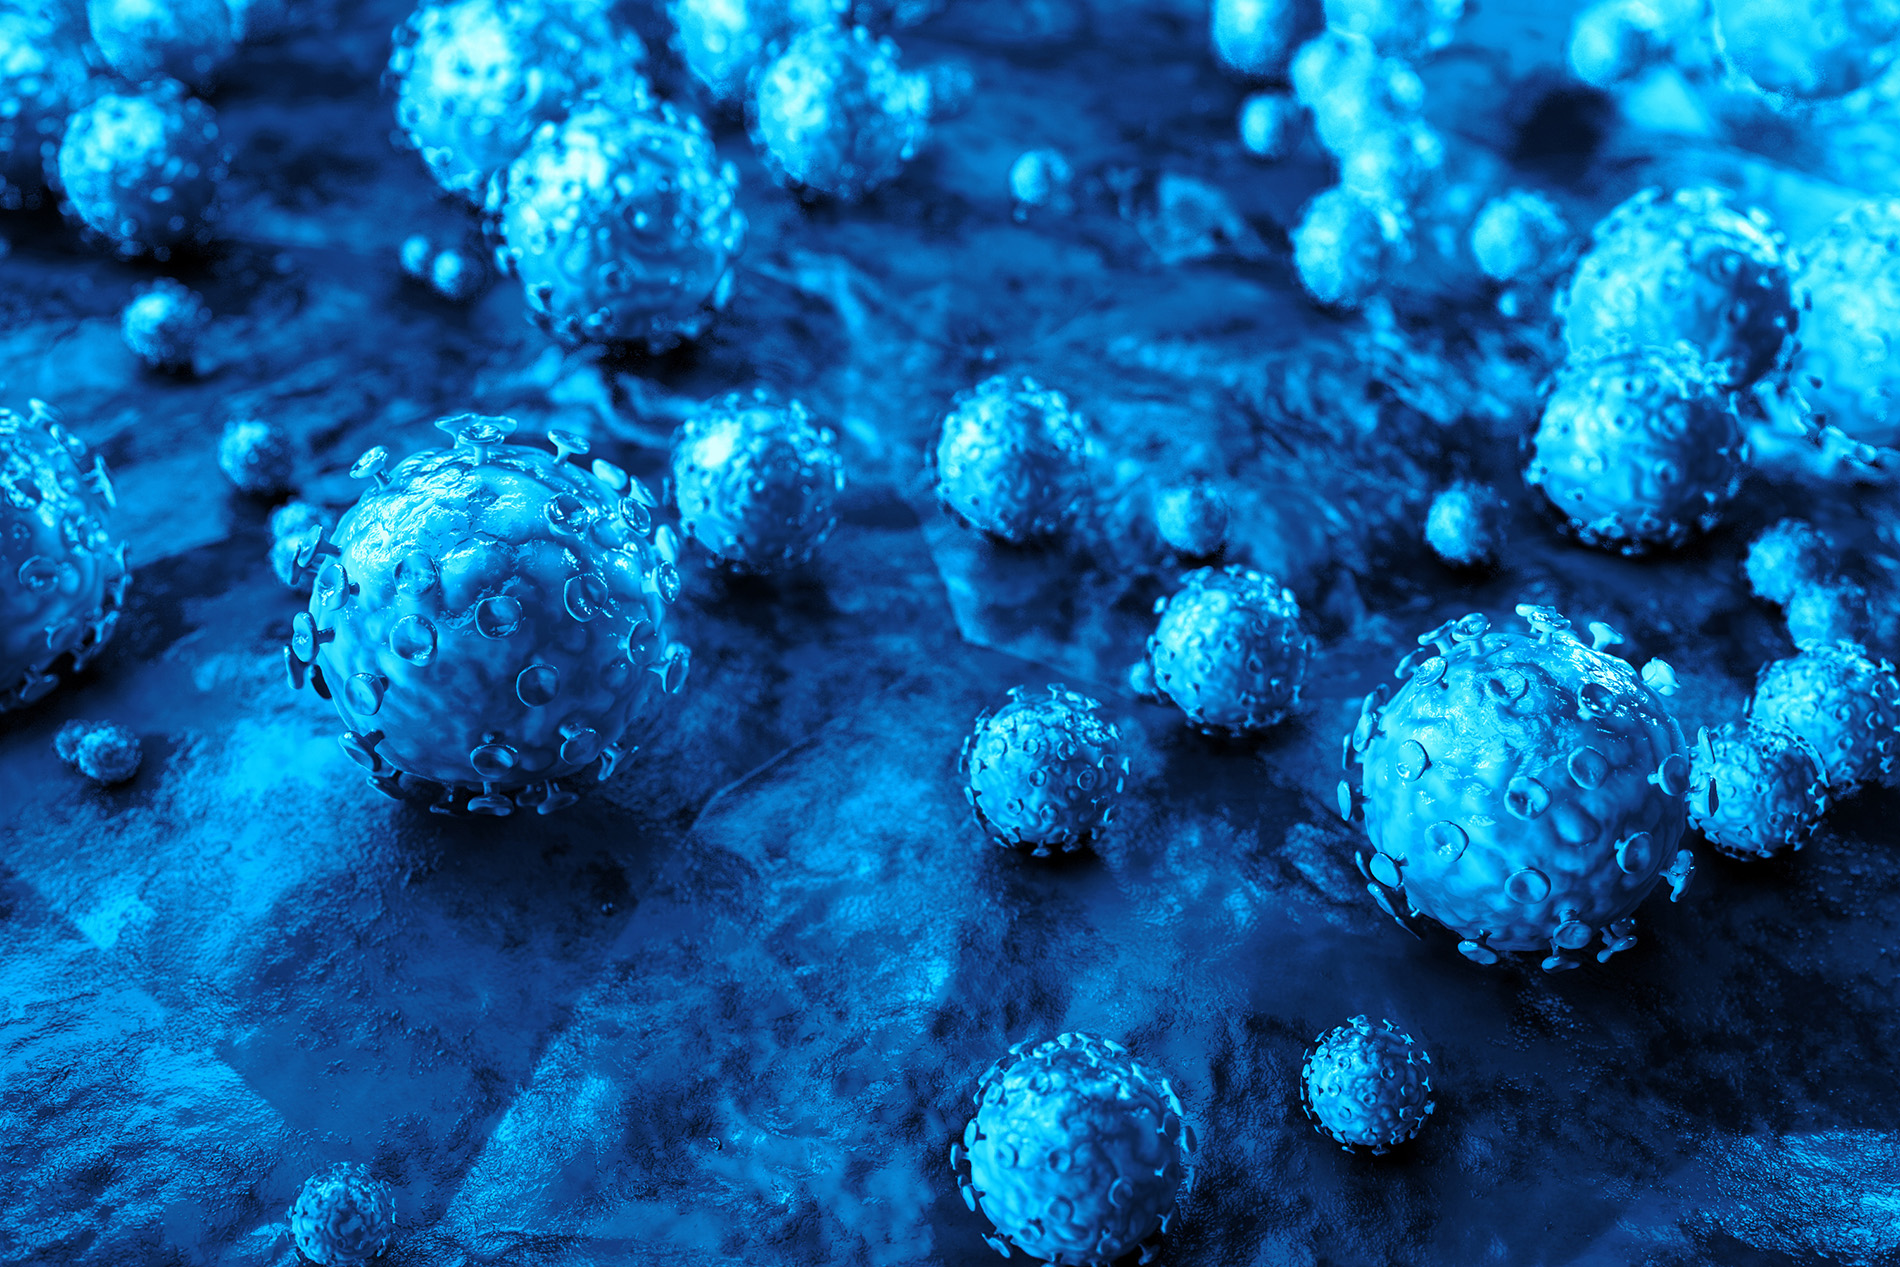 Microscopic view of HPV virus